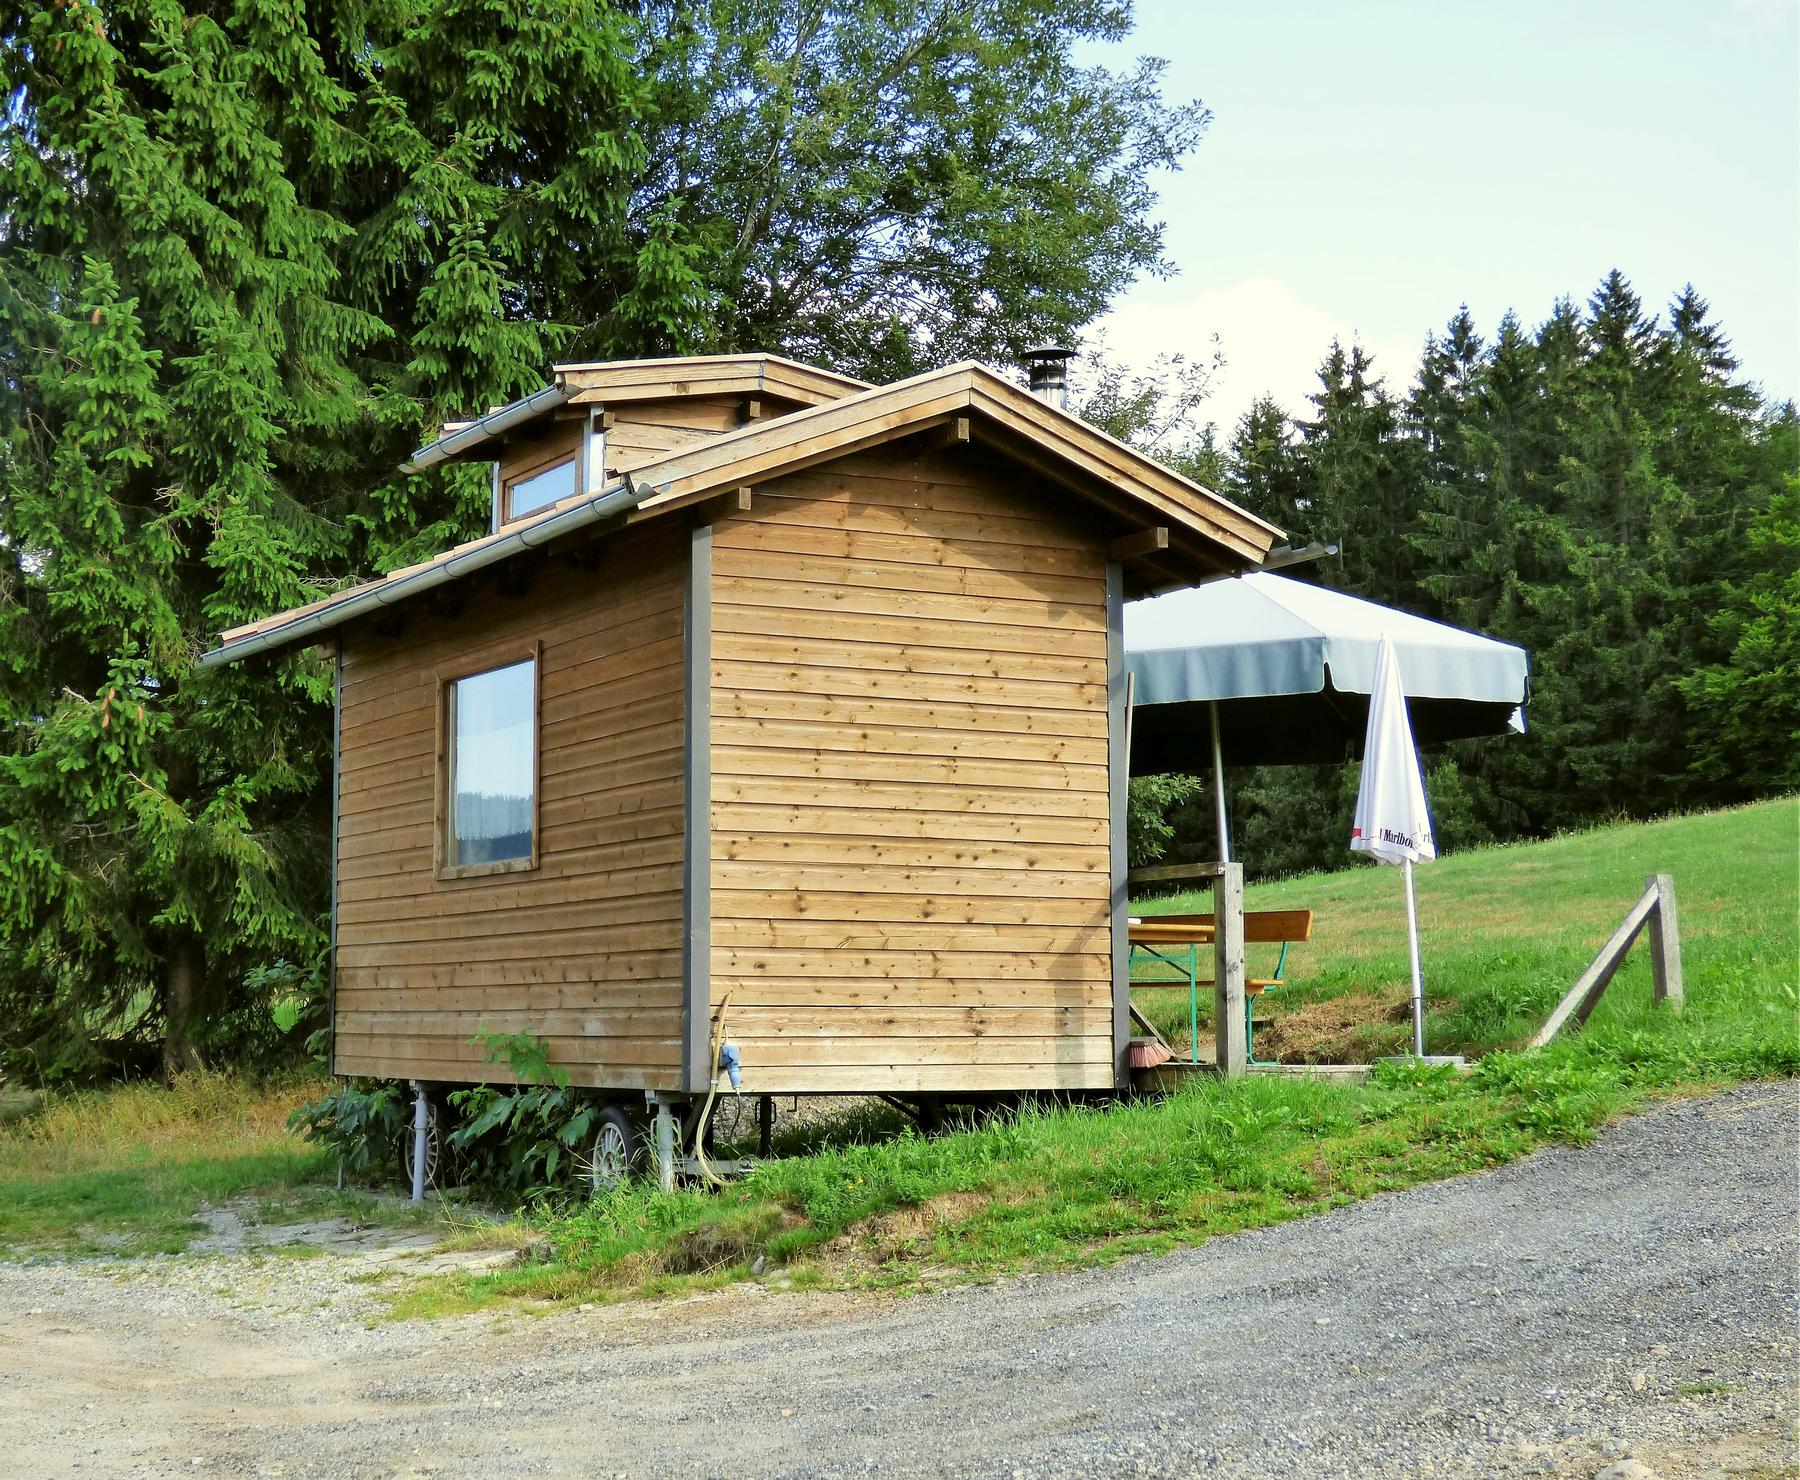 Tiny House Herzogsreut SJ Eda P1140187 b - a small wooden cabin